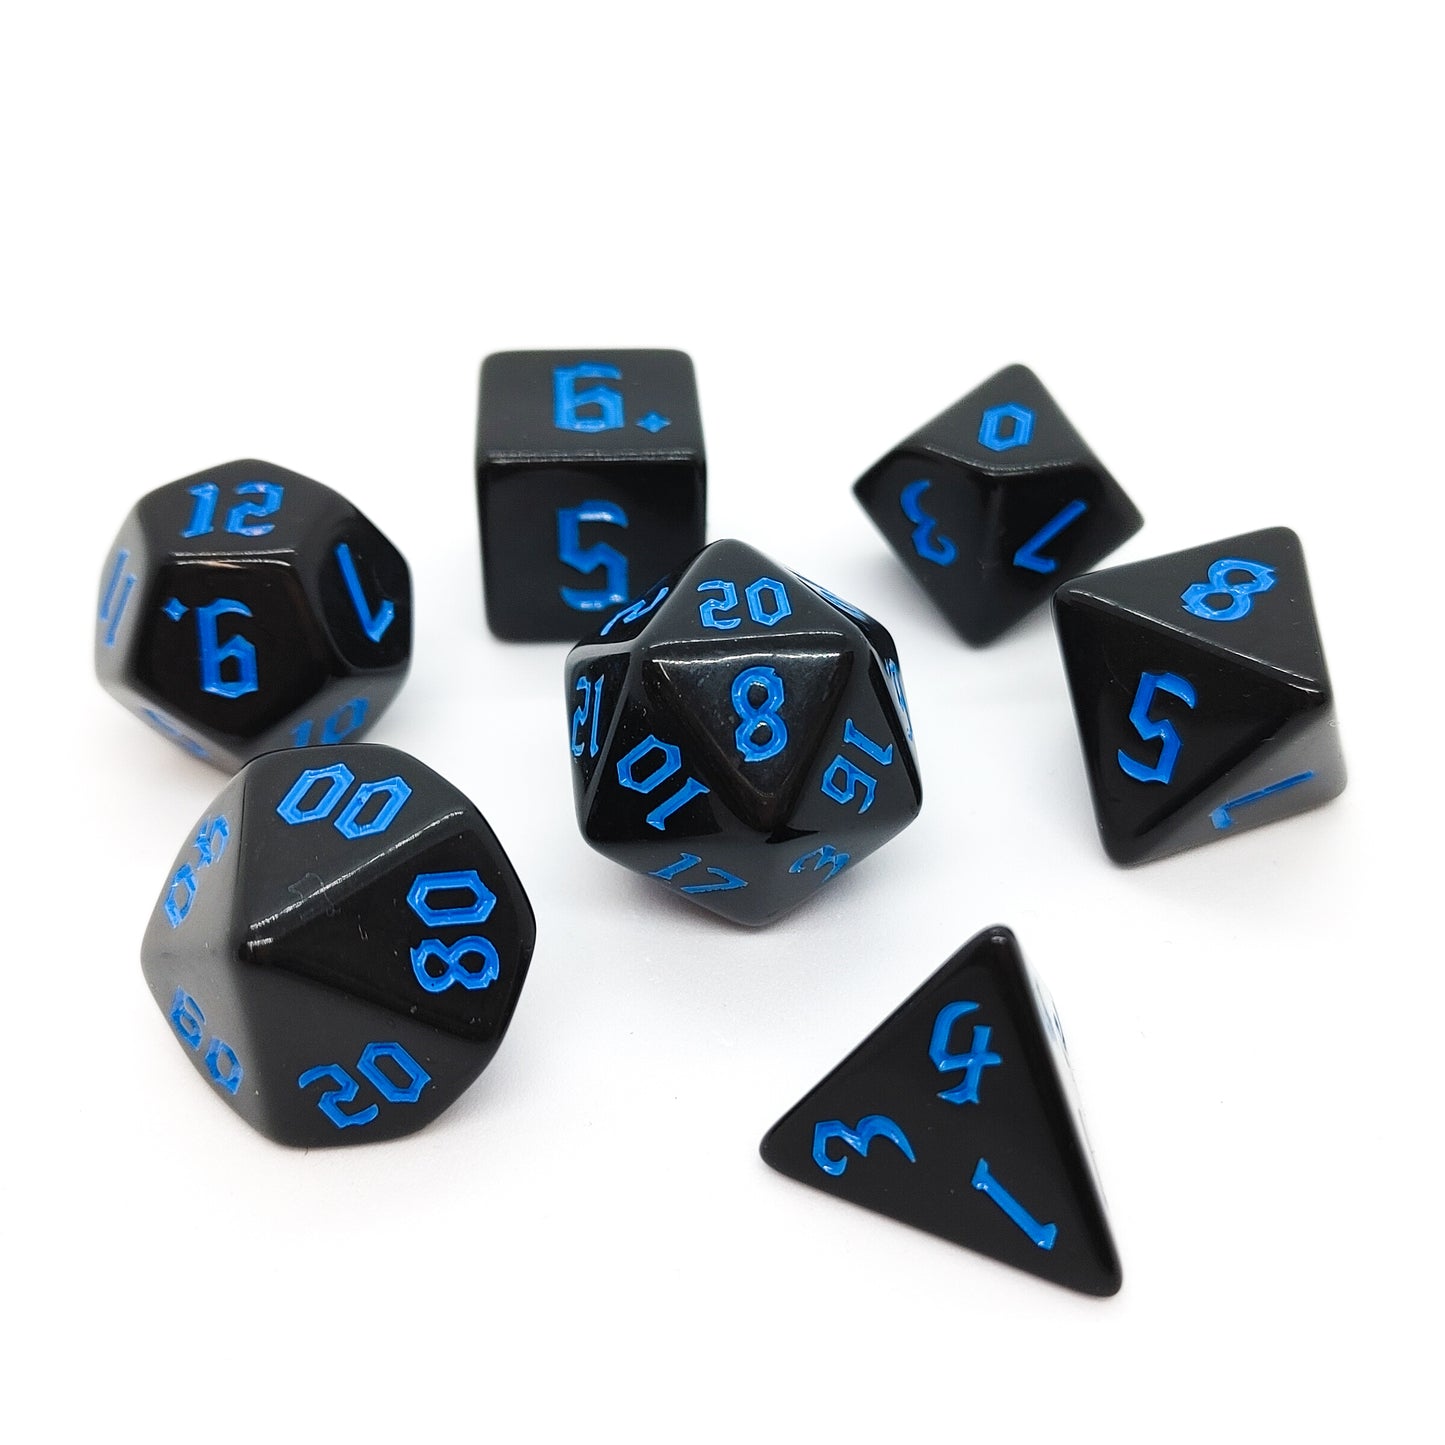 The Wizard - Opaque dice set - 7 piece RPG dice set